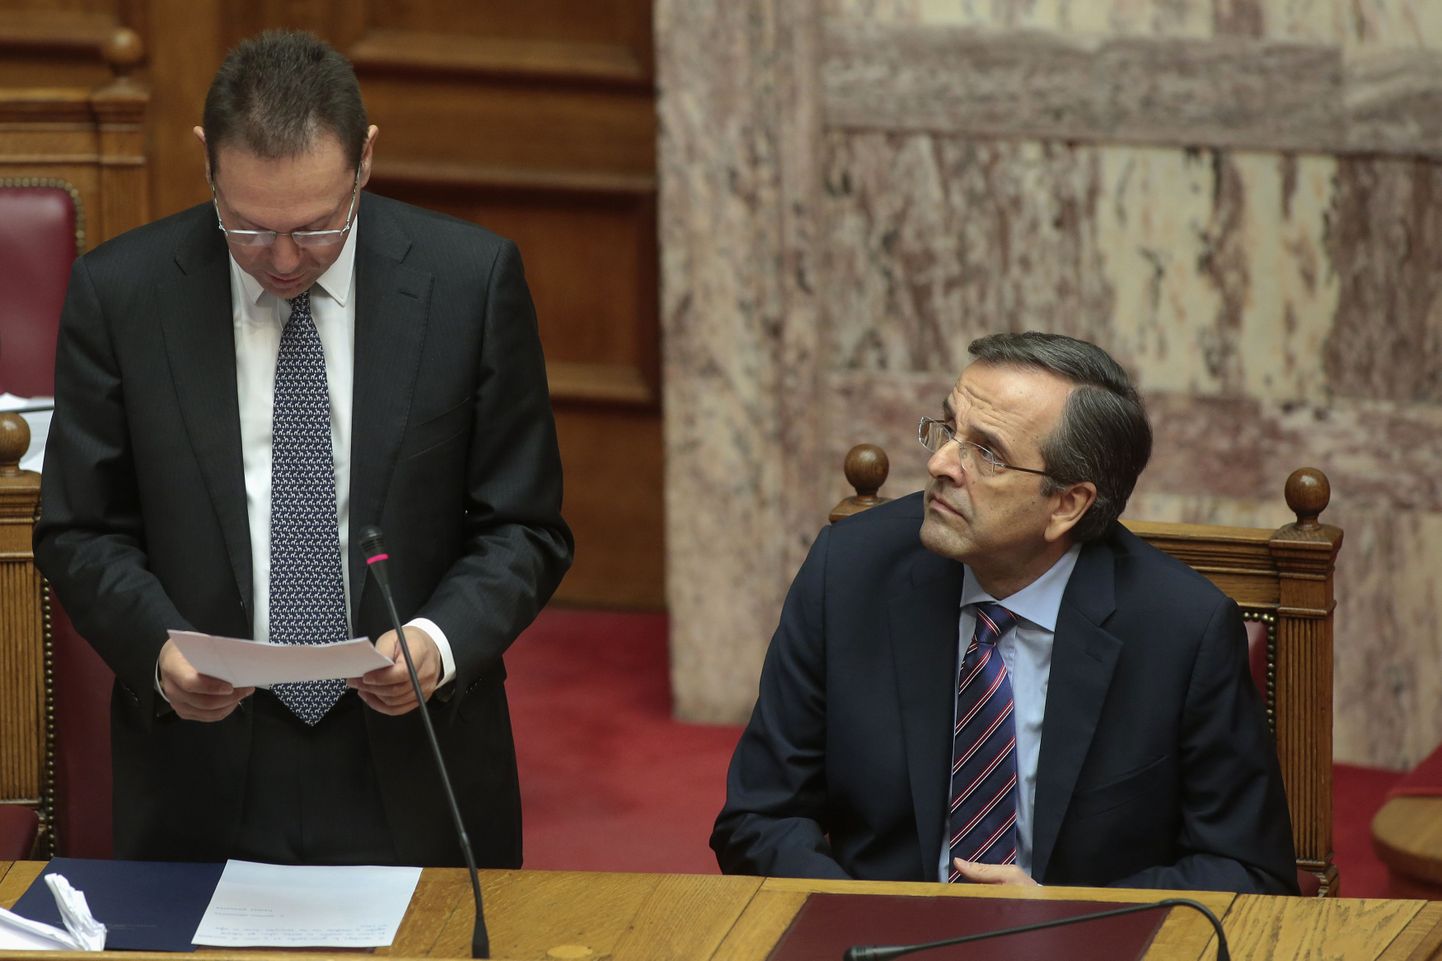 Kreeka peaminister Antonis Samaras (paremal)parlamendis rahandusminister Yannis Stournarast kuulamas.